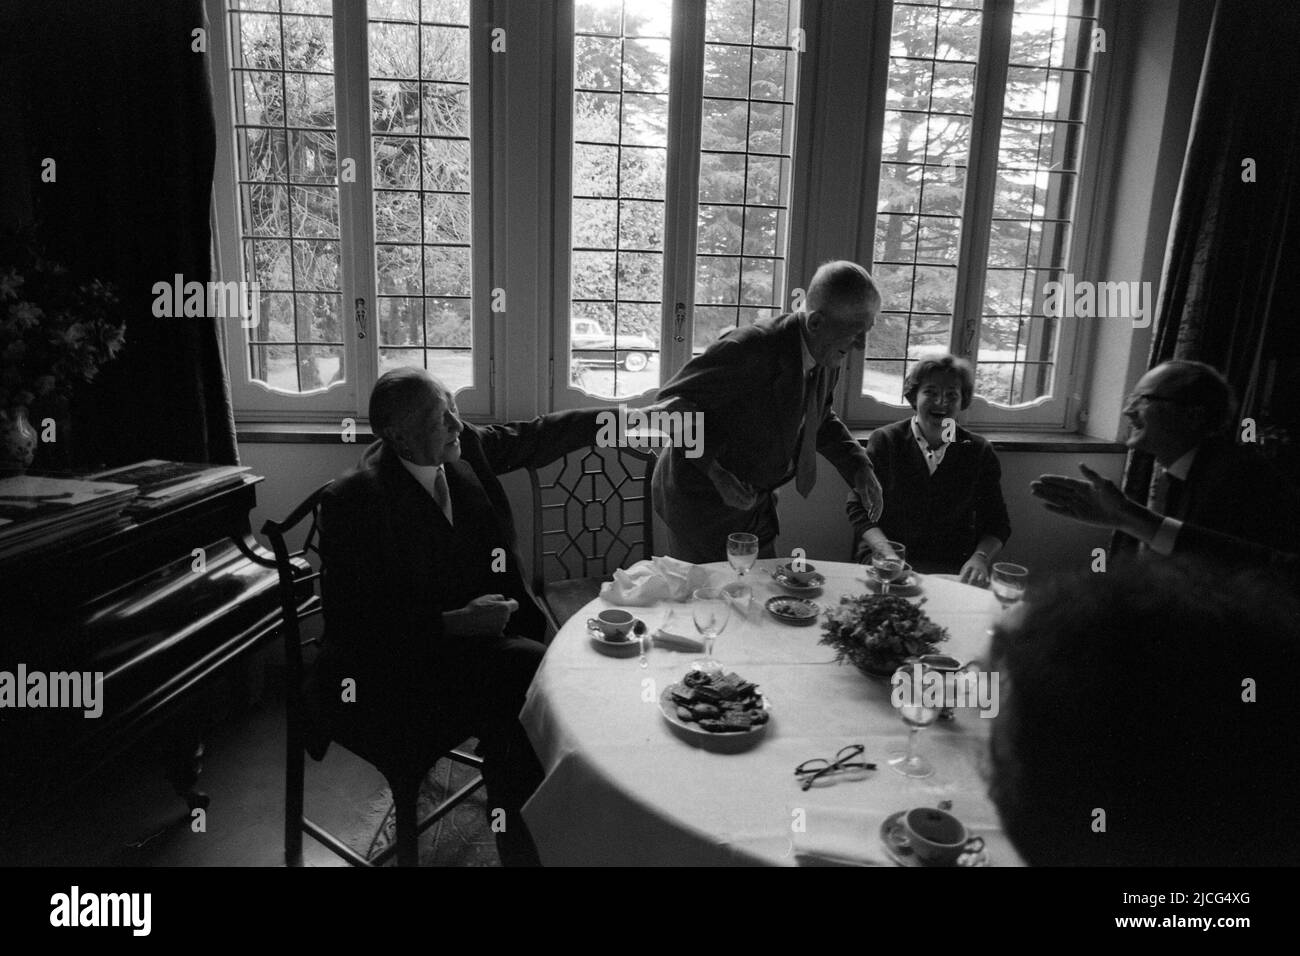 Oskar KOKOSCHKA (centre), Austria, painter, sits with his wife Olda and former Federal Chancellor Konrad ADENAUER, CDU, at a table, coffee table, they joke, friendly, April 15, 1966 Stock Photo